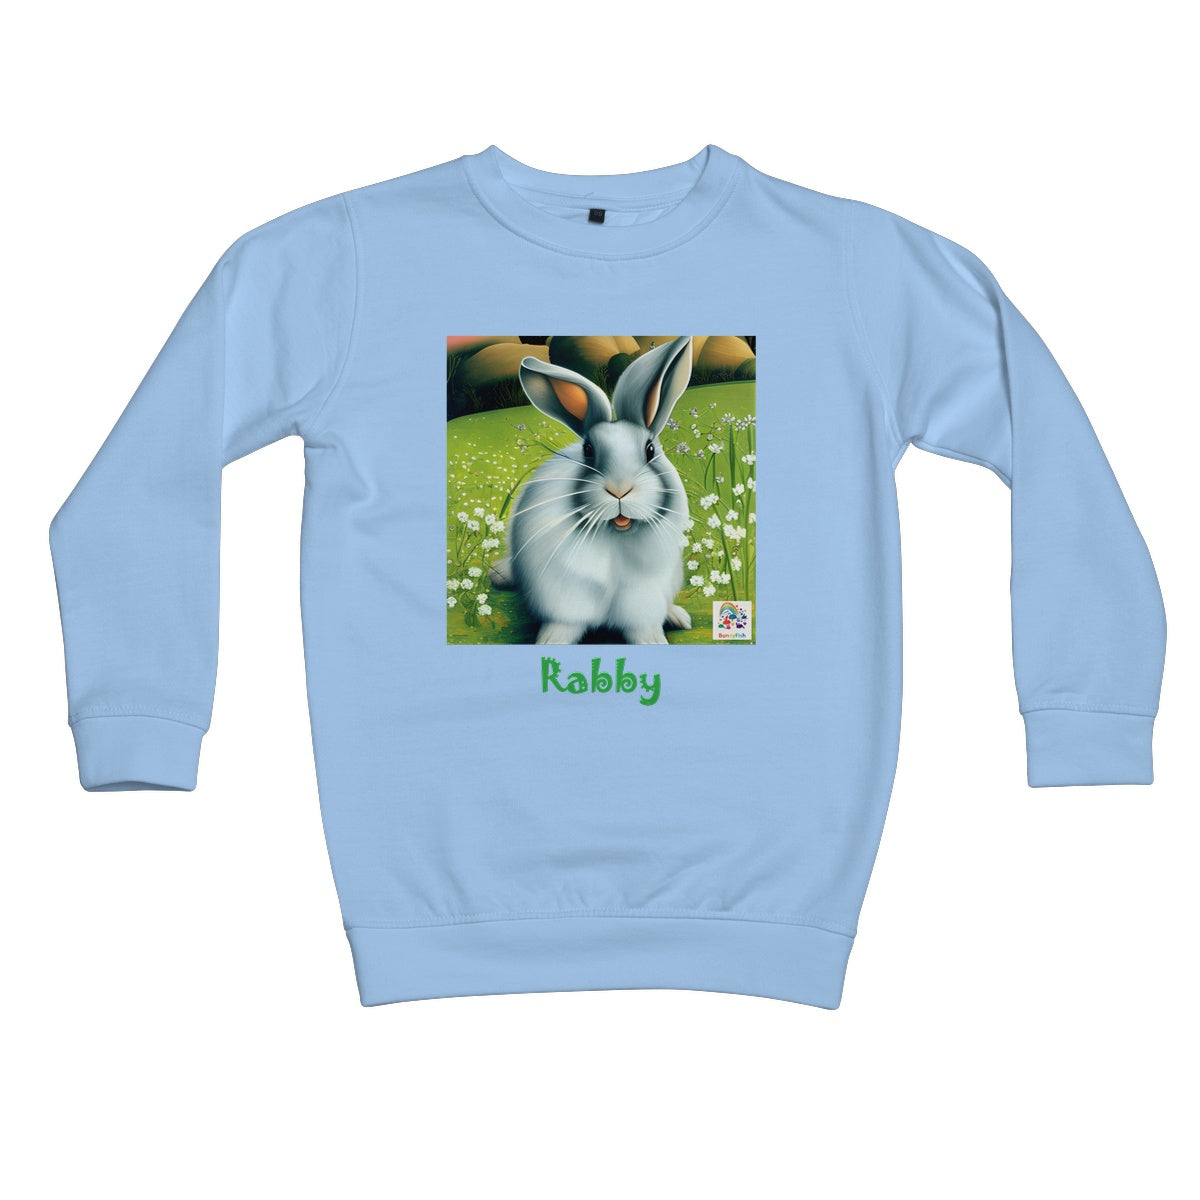 Rabby Kids' Sweatshirt